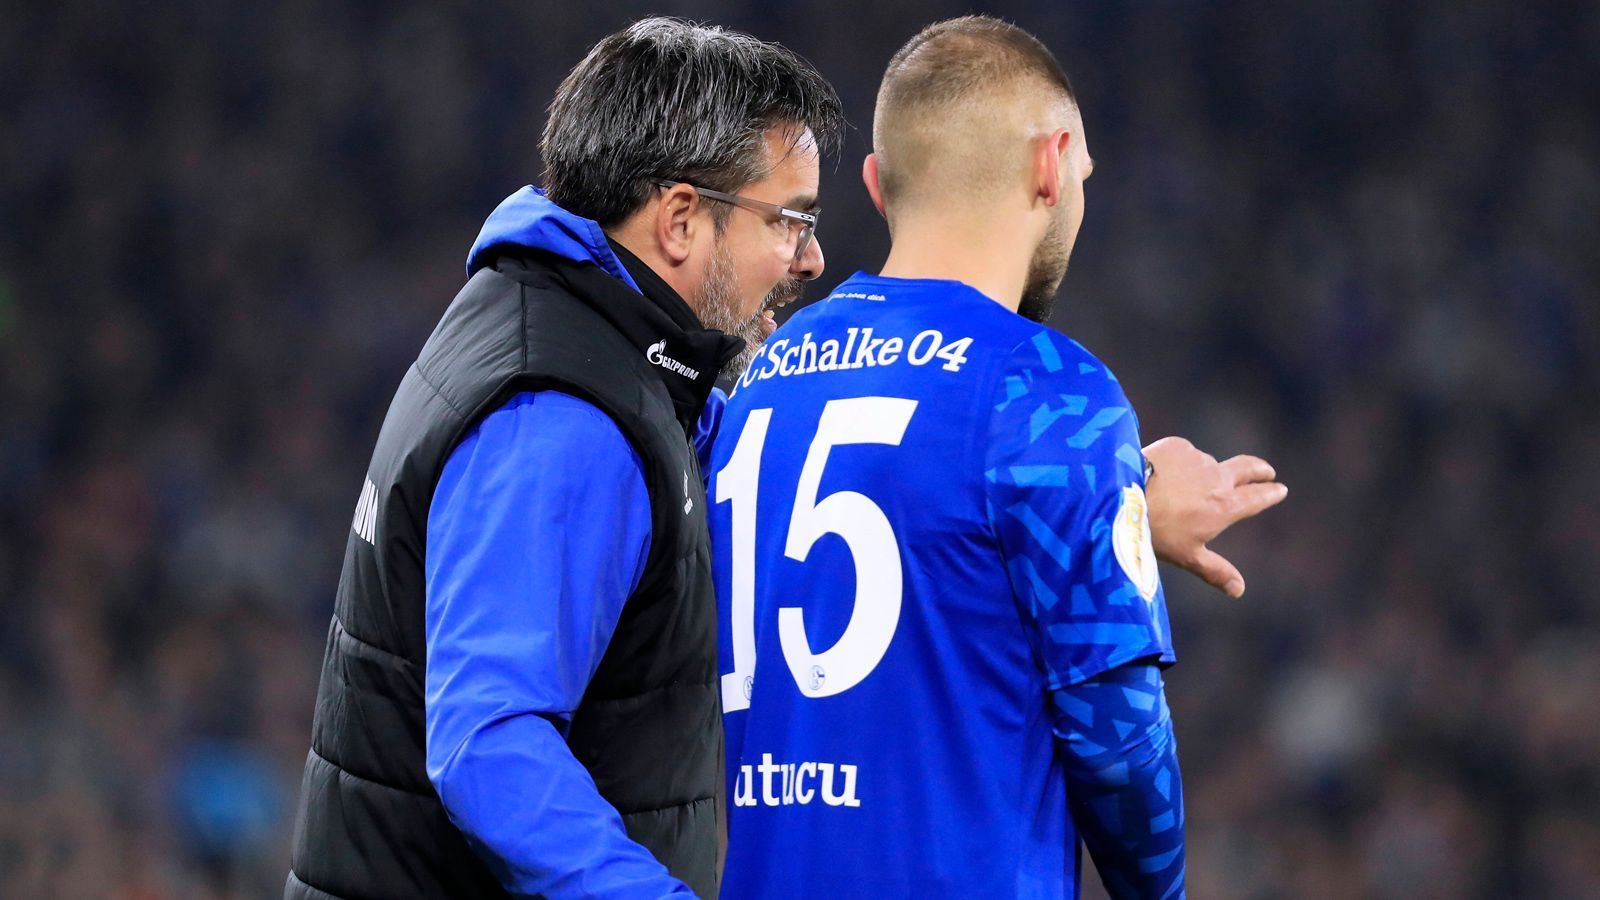 
                <strong>FC Schalke 04</strong><br>
                Drohender Fernsehgelder-Verlust: 26,07 Millionen Euro
              